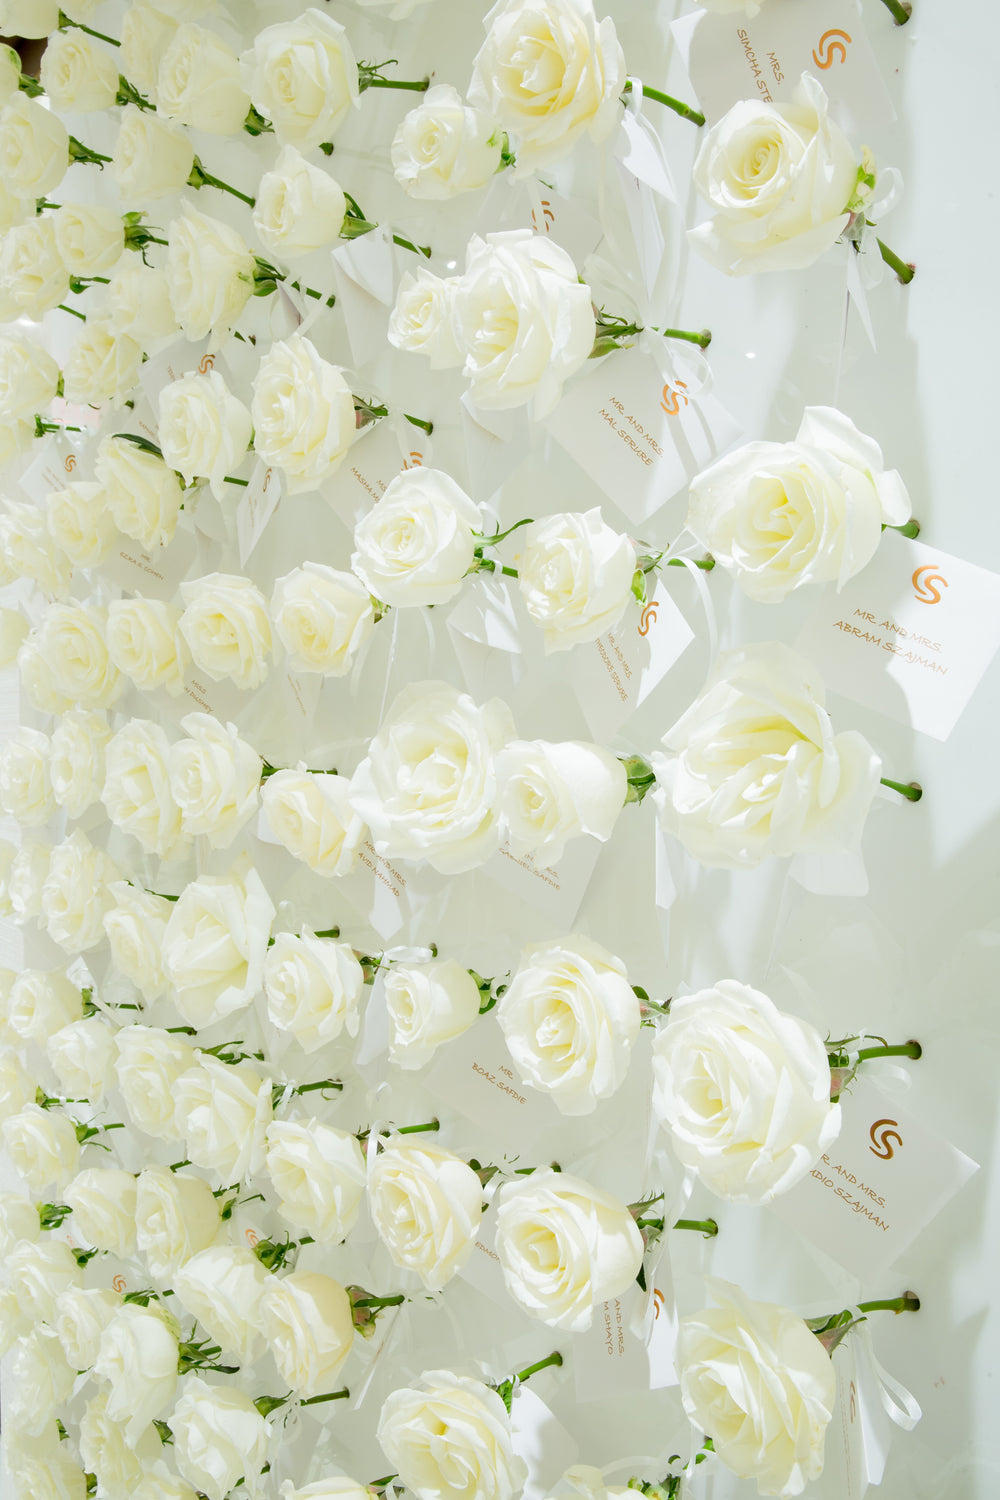 White Wonder Event Floral Design